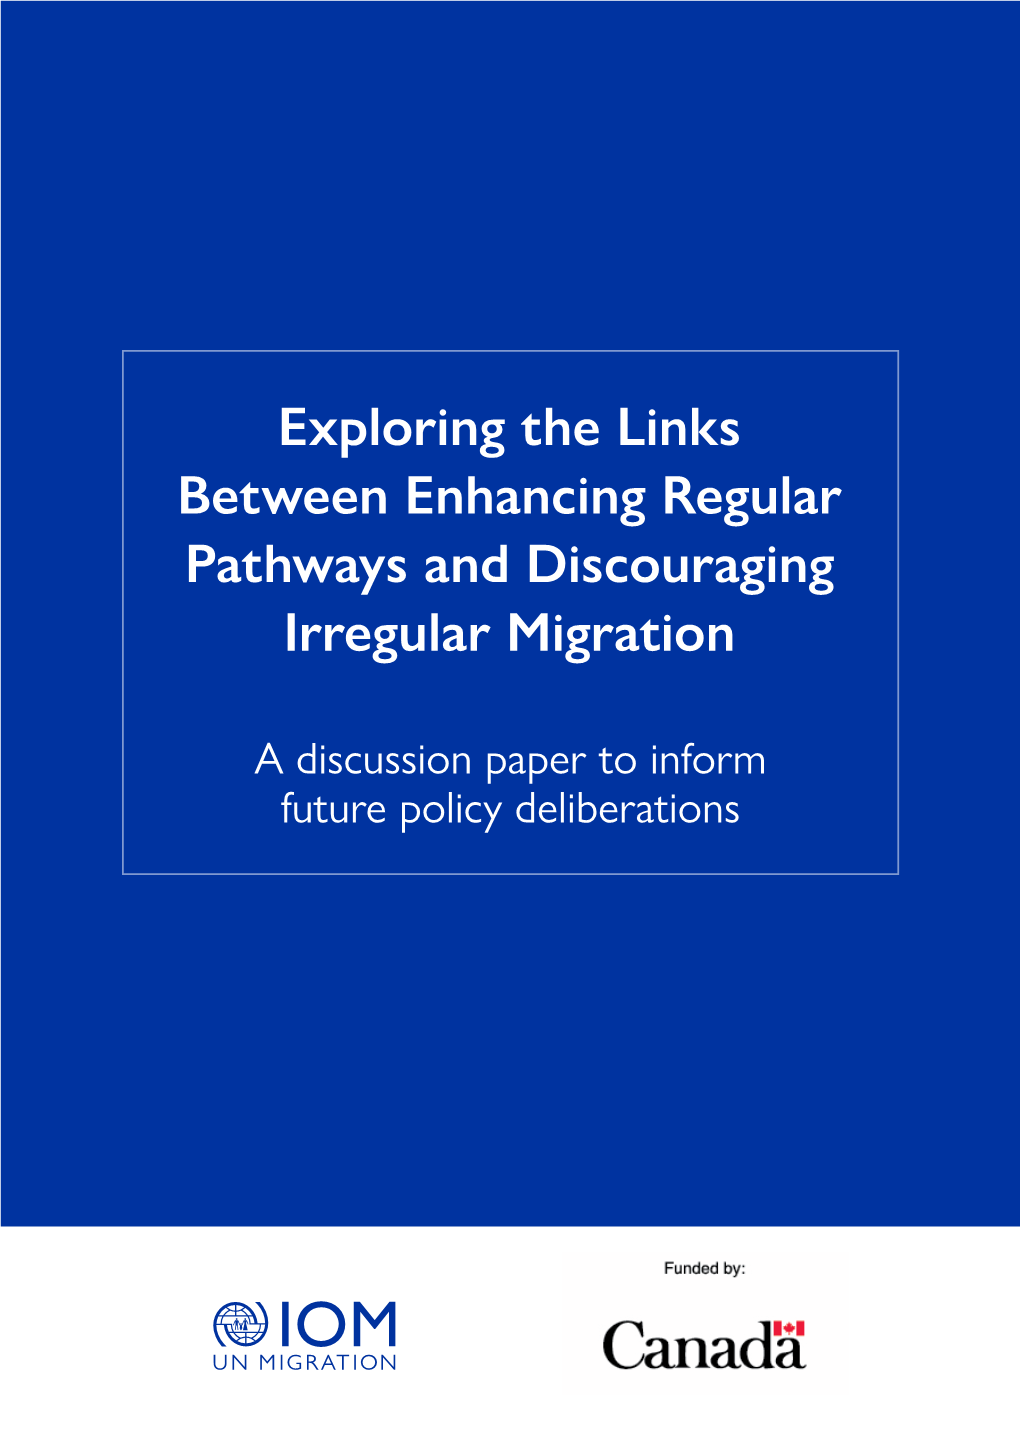 Exploring the Links Between Enhancing Regular Pathways and Discouraging Irregular Migration